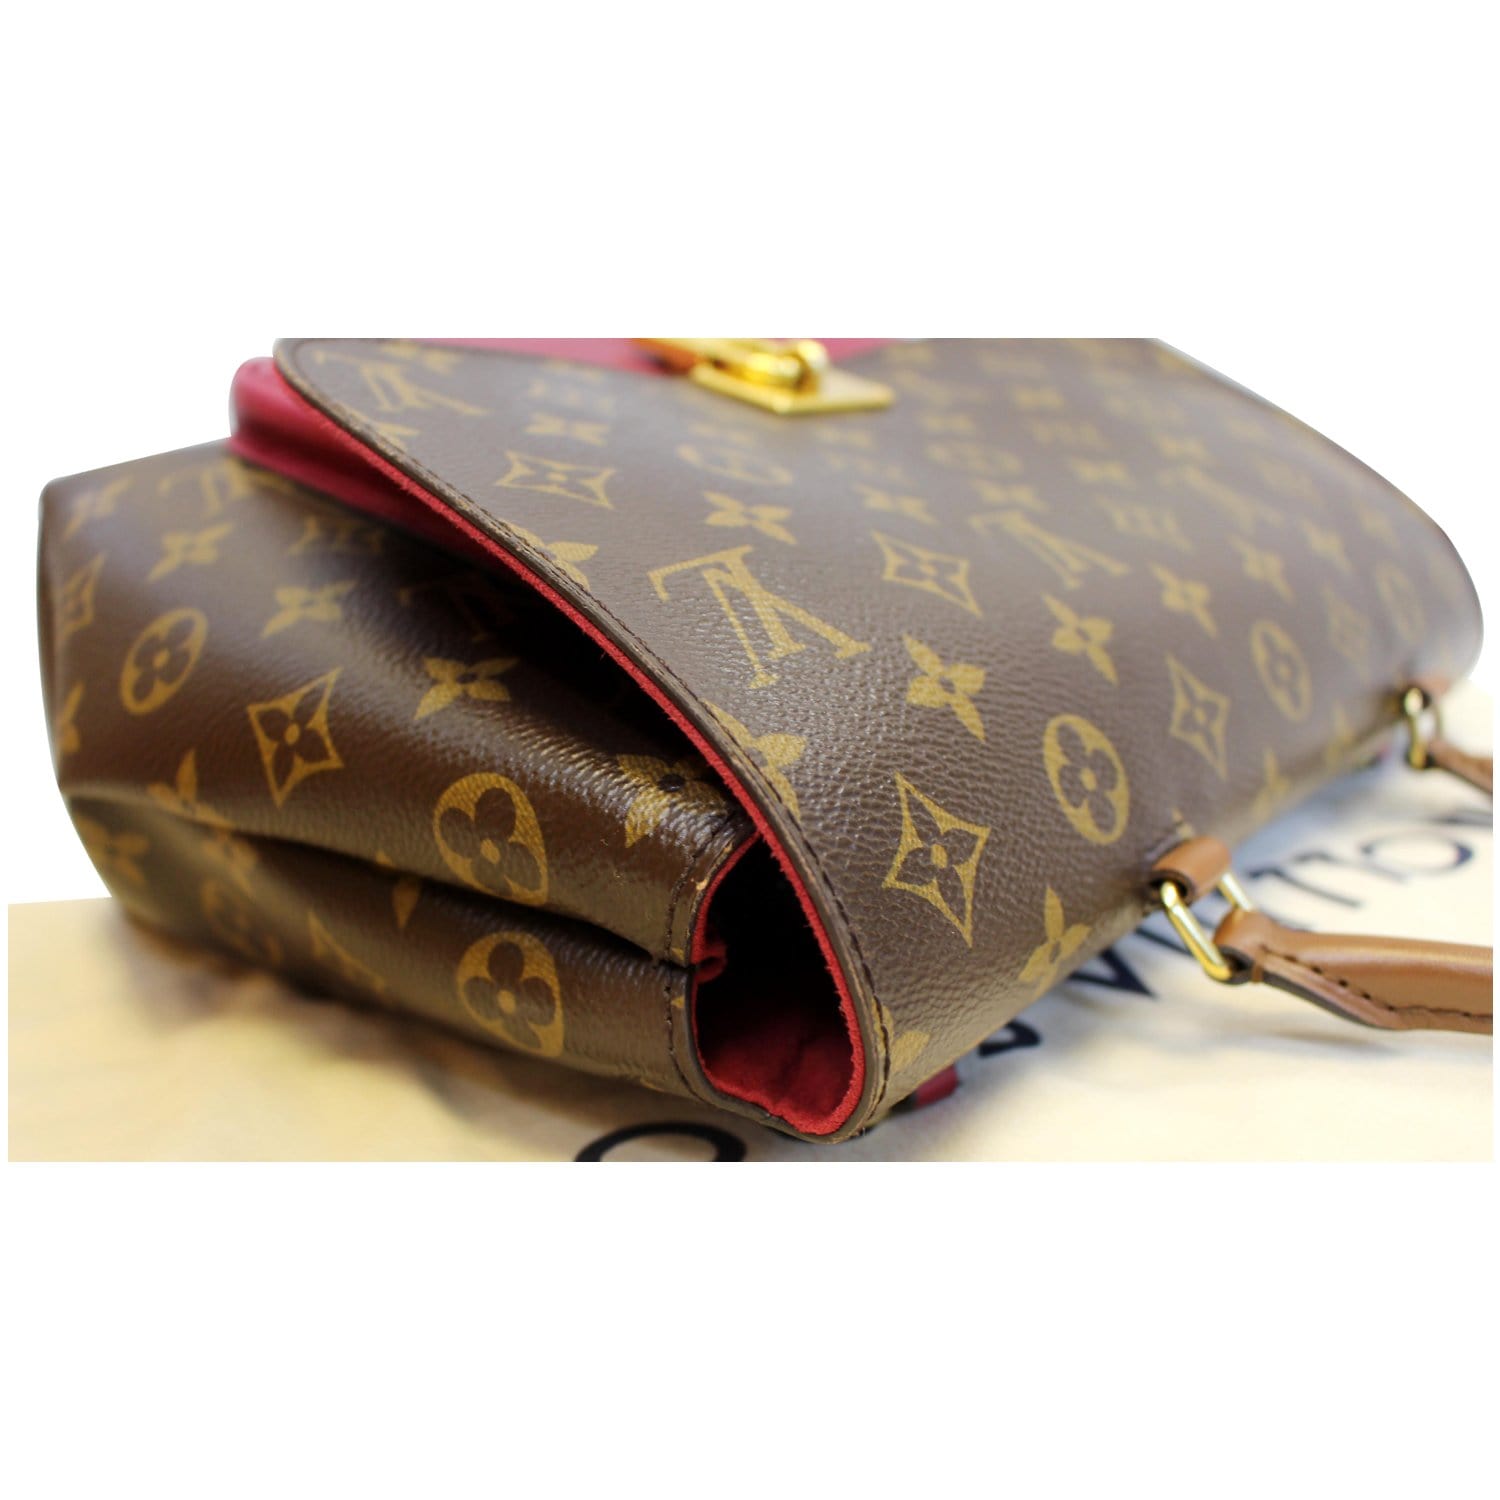 Marignan Top Handle Bag in Monogram coated canvas, Gold Hardware